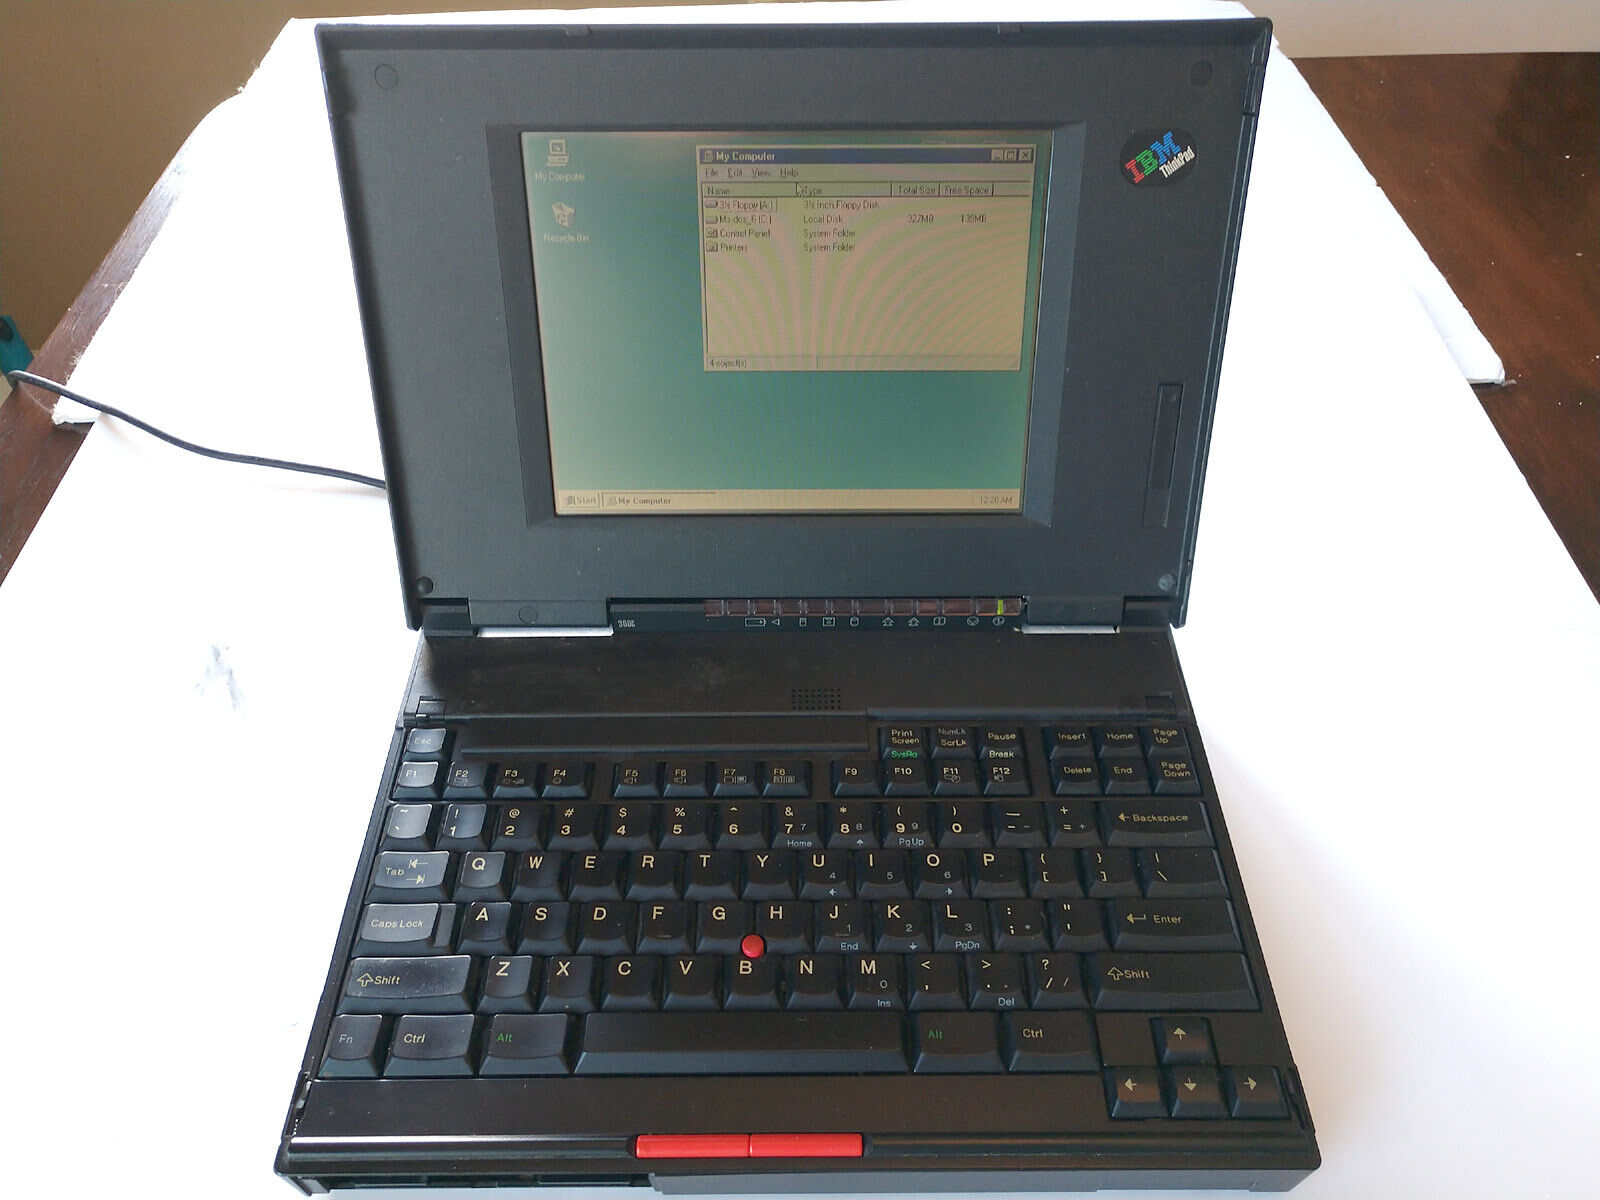 IBM ThinkPad 360C 486SX/33 12MB 340MB HDD - CANADA